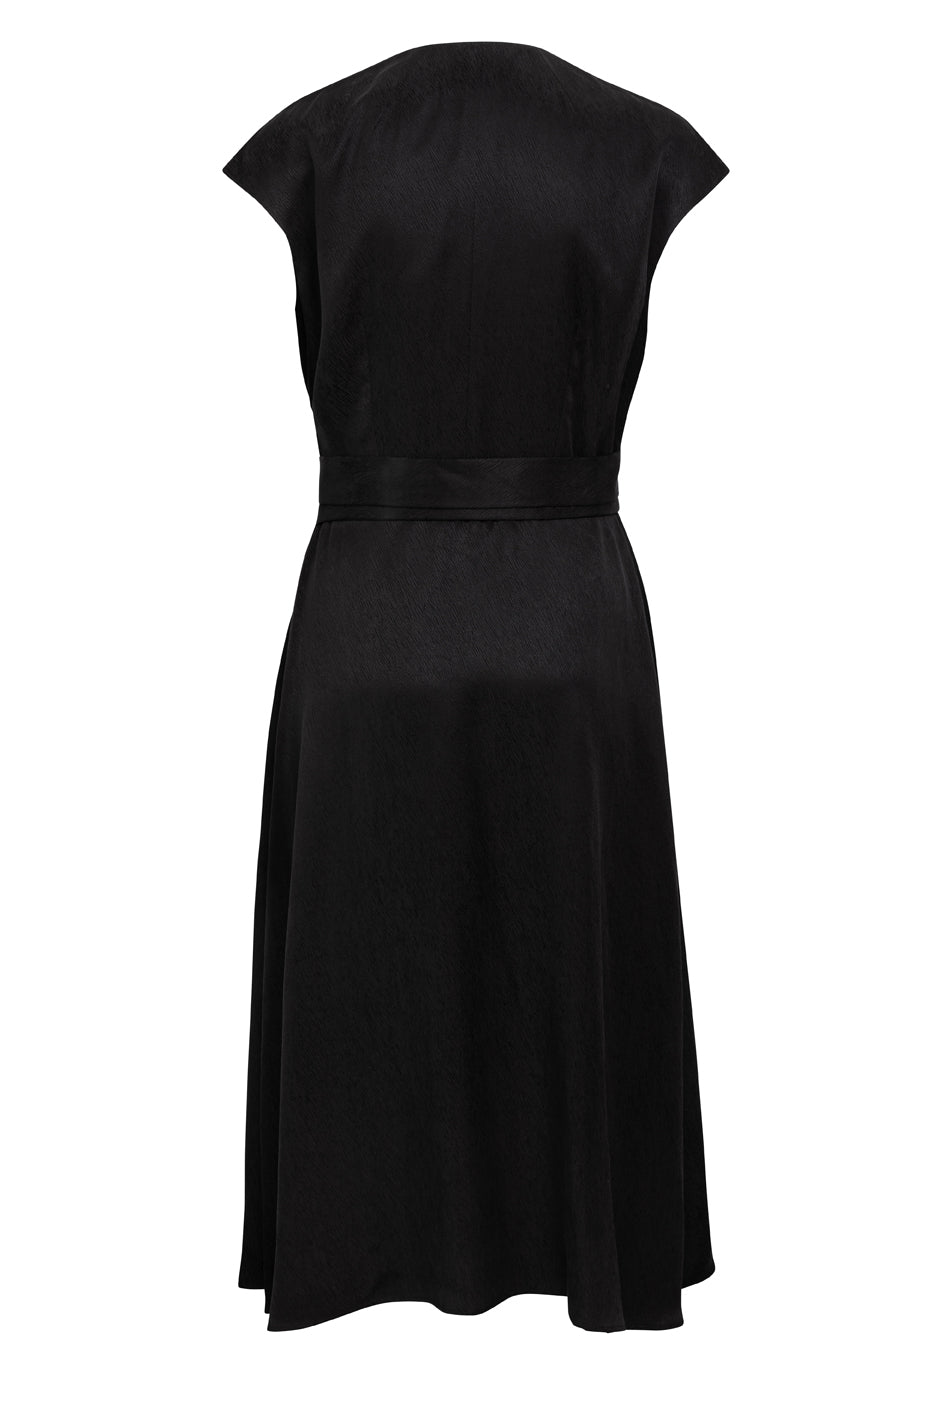 02/11 Wrap Dress shiny black back – hello'ben store